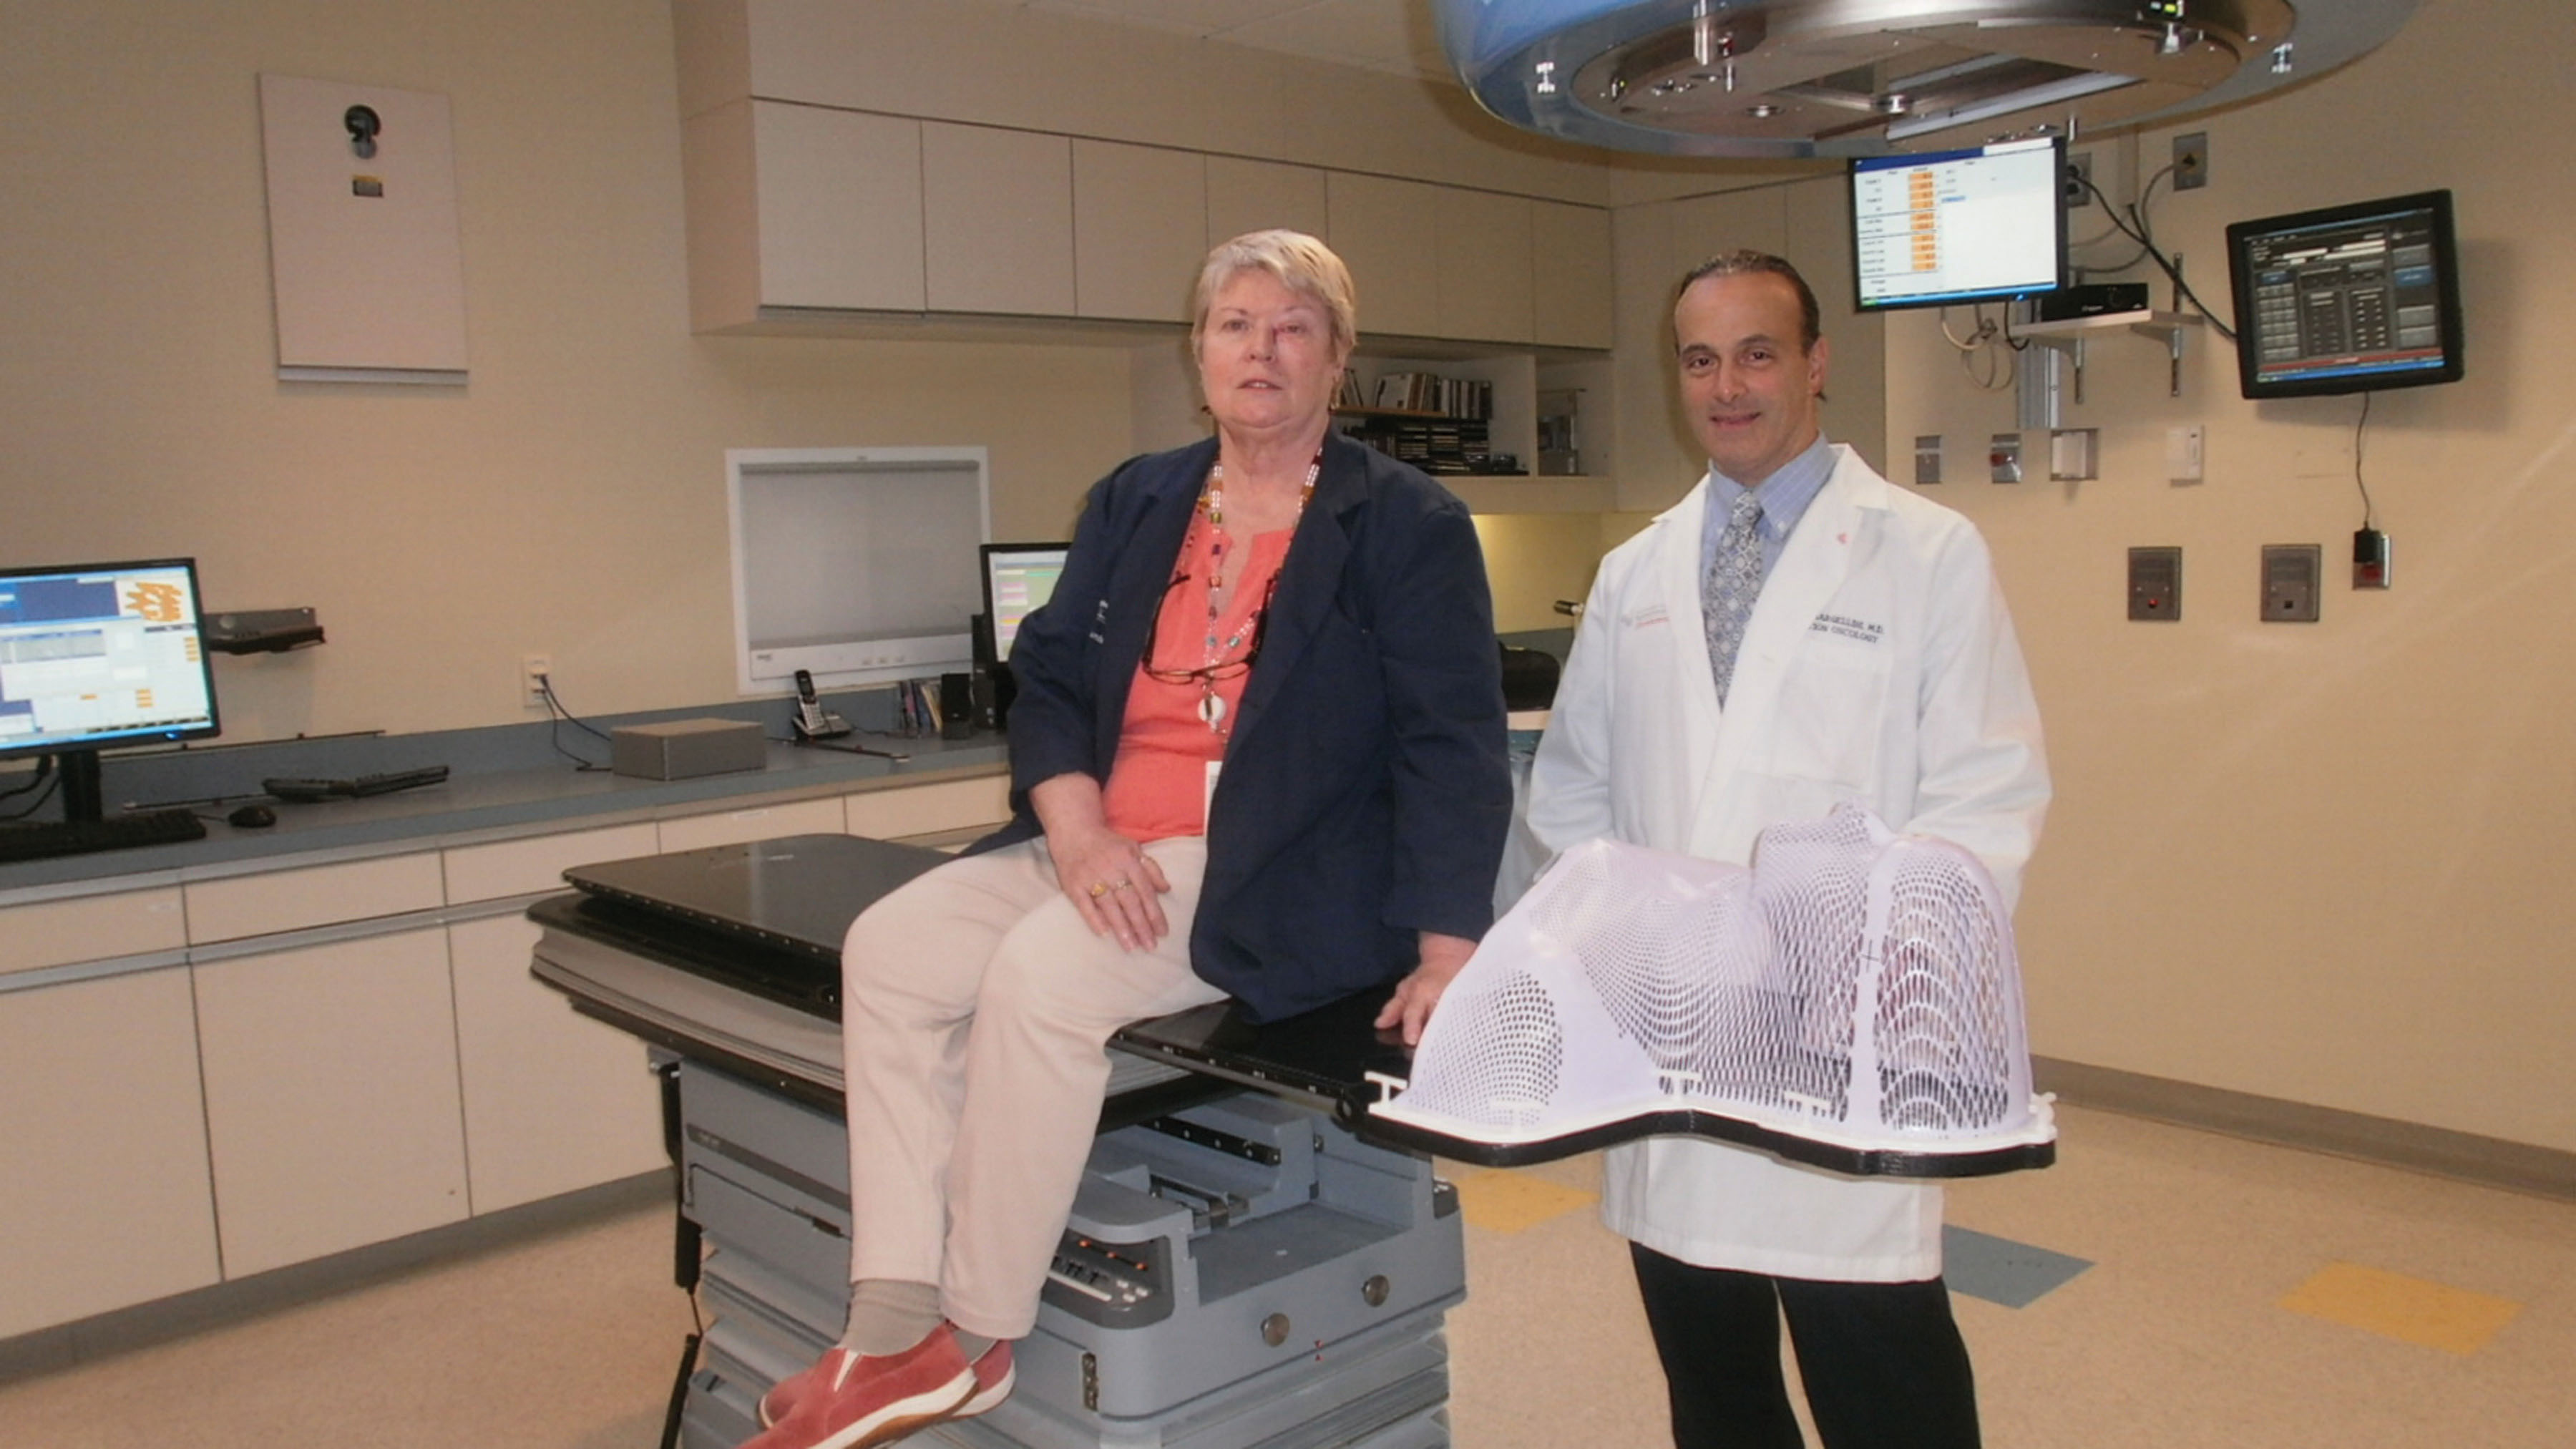 Protura机器人病人定位系统提供的高精确度使癌症患者凯西·凯利的治疗完全不同，如图所示，她和她的医生约瑟夫·巴格里尼。